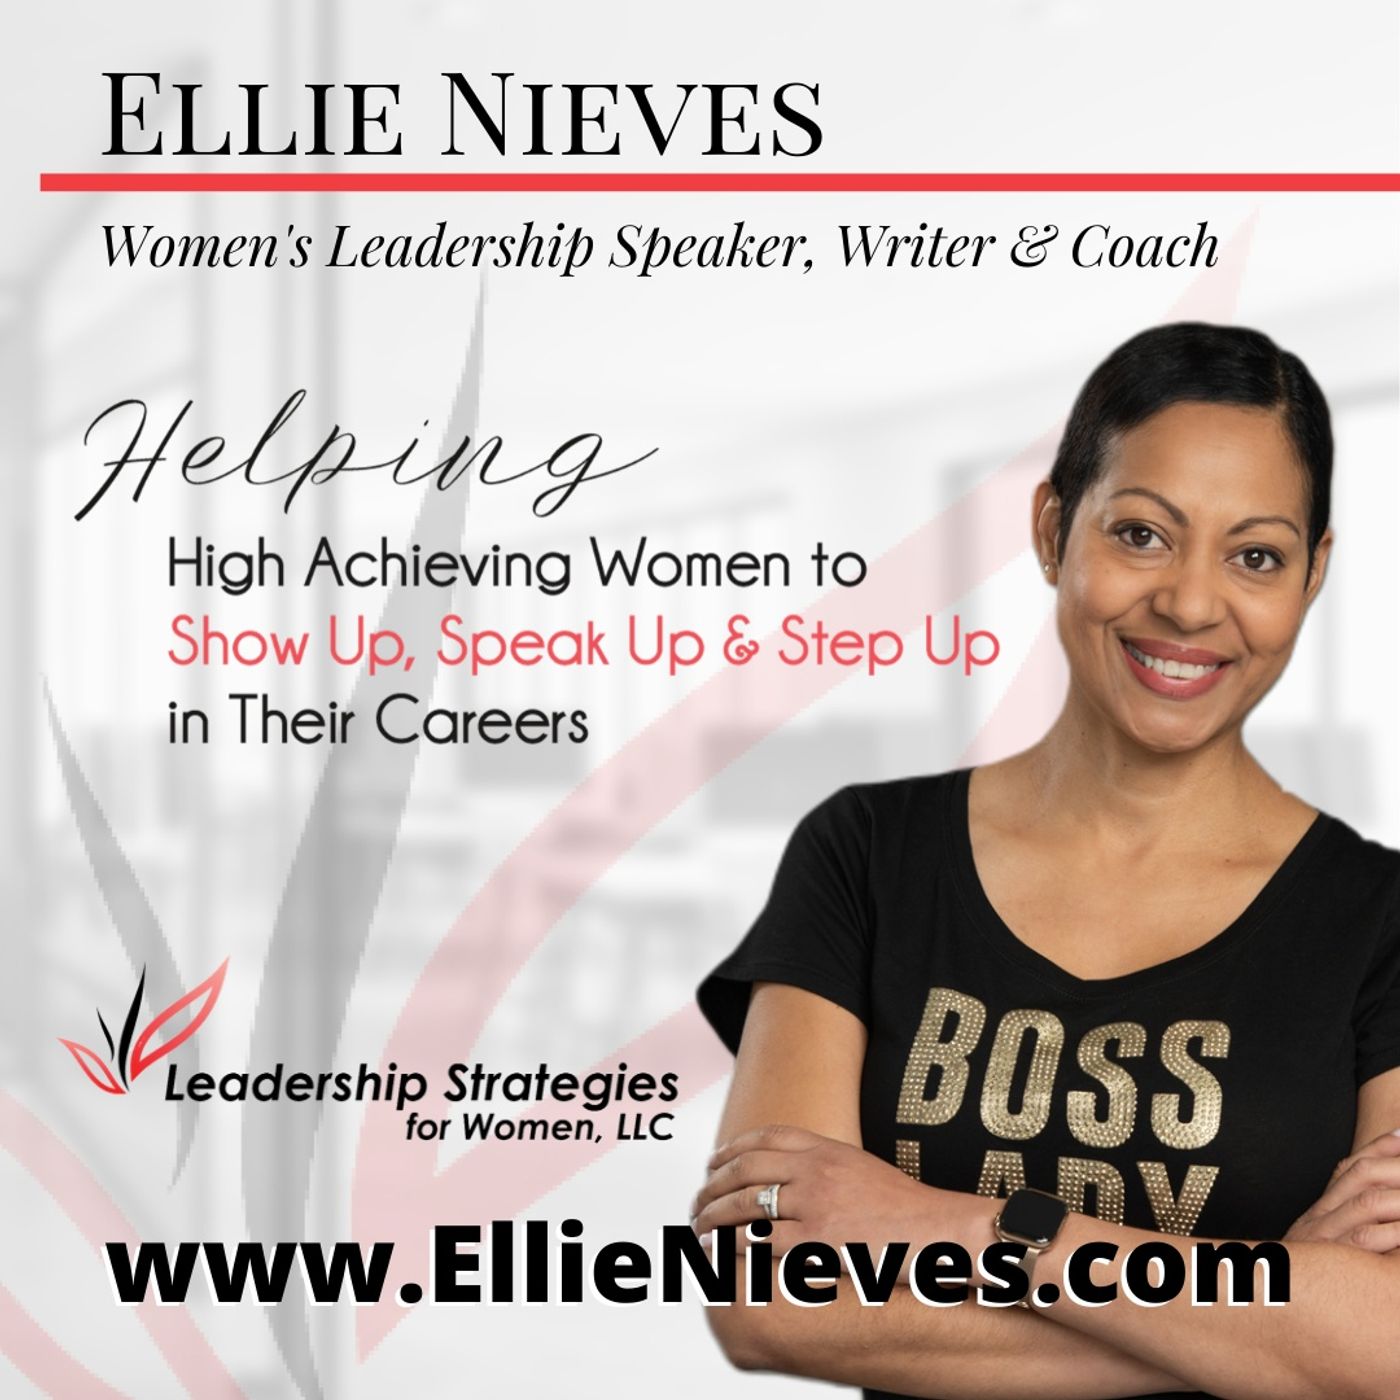 Leadership Strategies for Women®